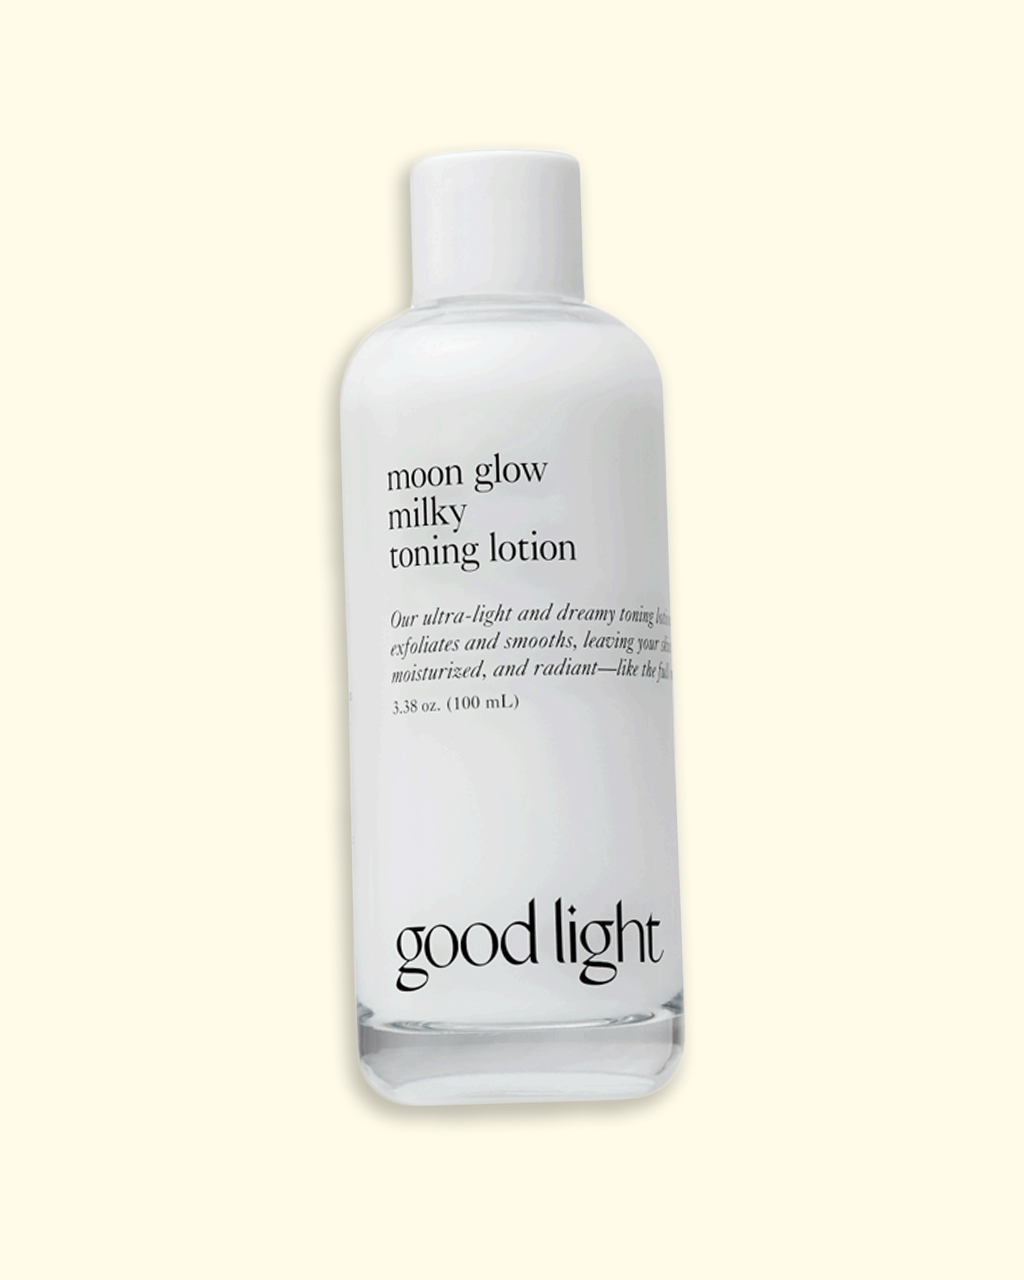 goodlight moon glow milky toning lotion